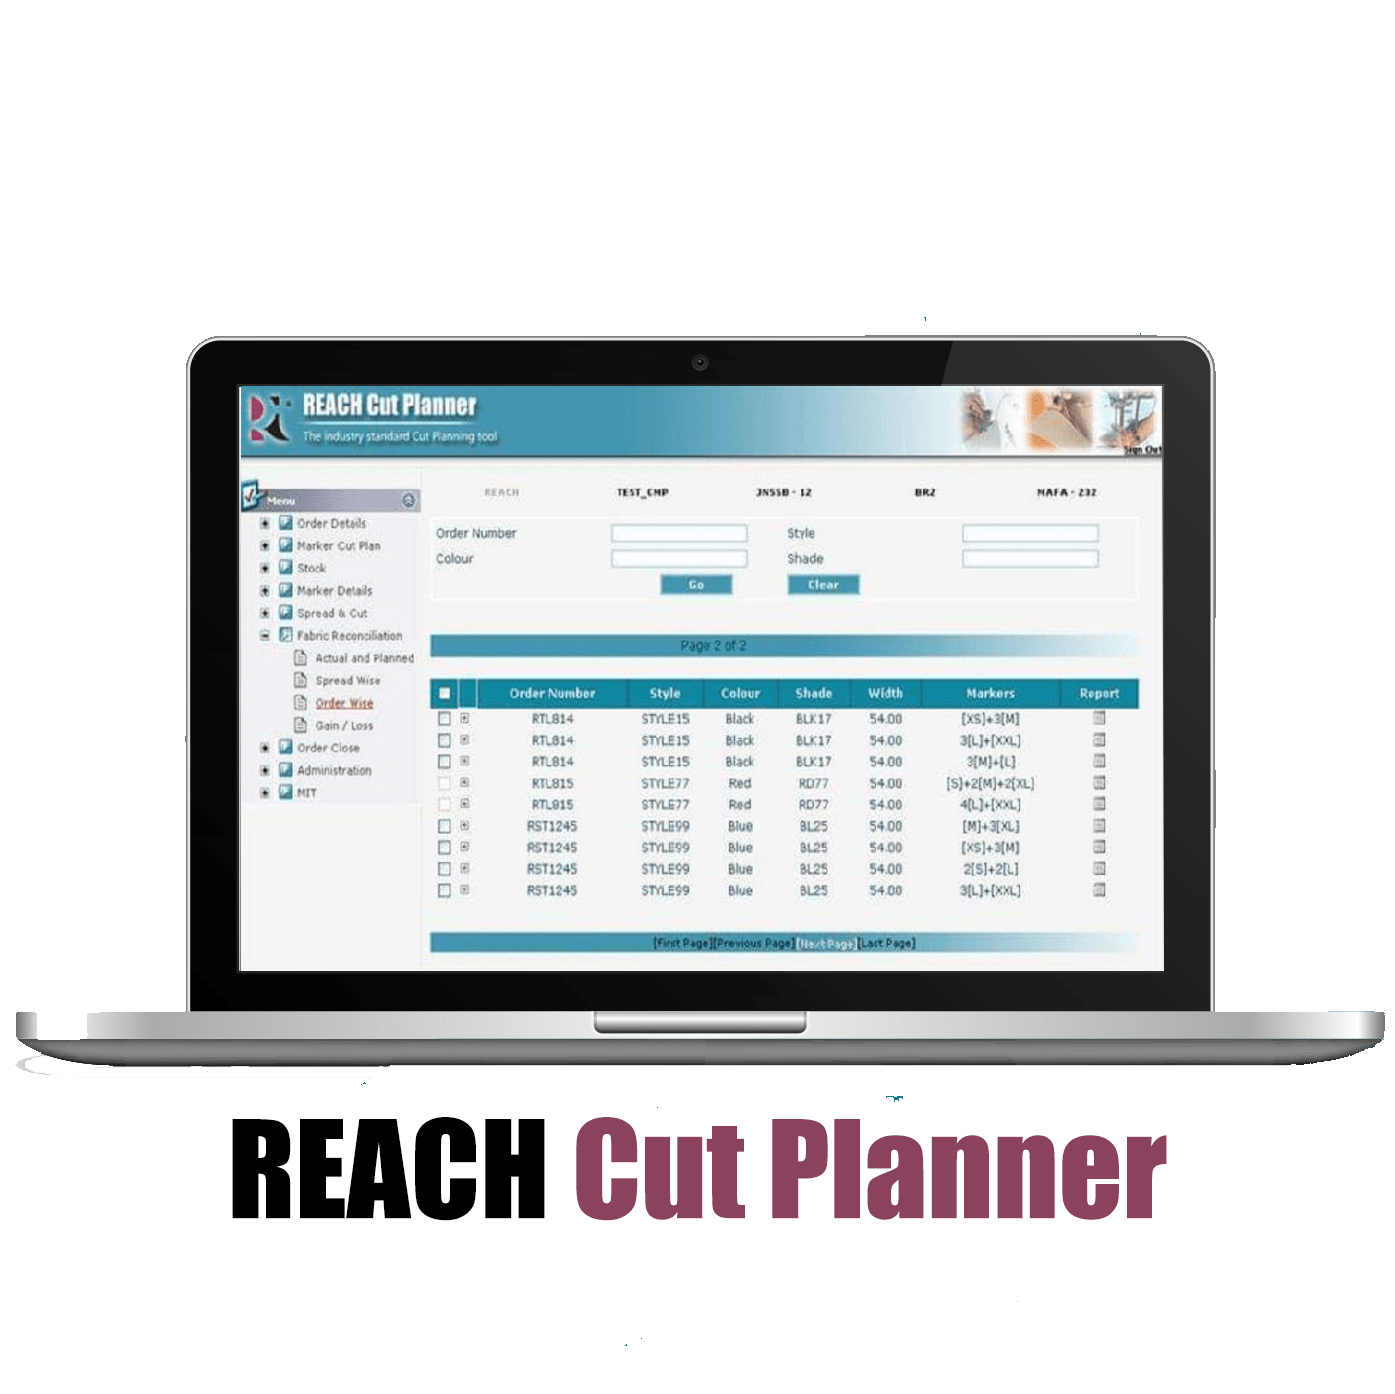 Reach cut planner software for apparel  cut order planning